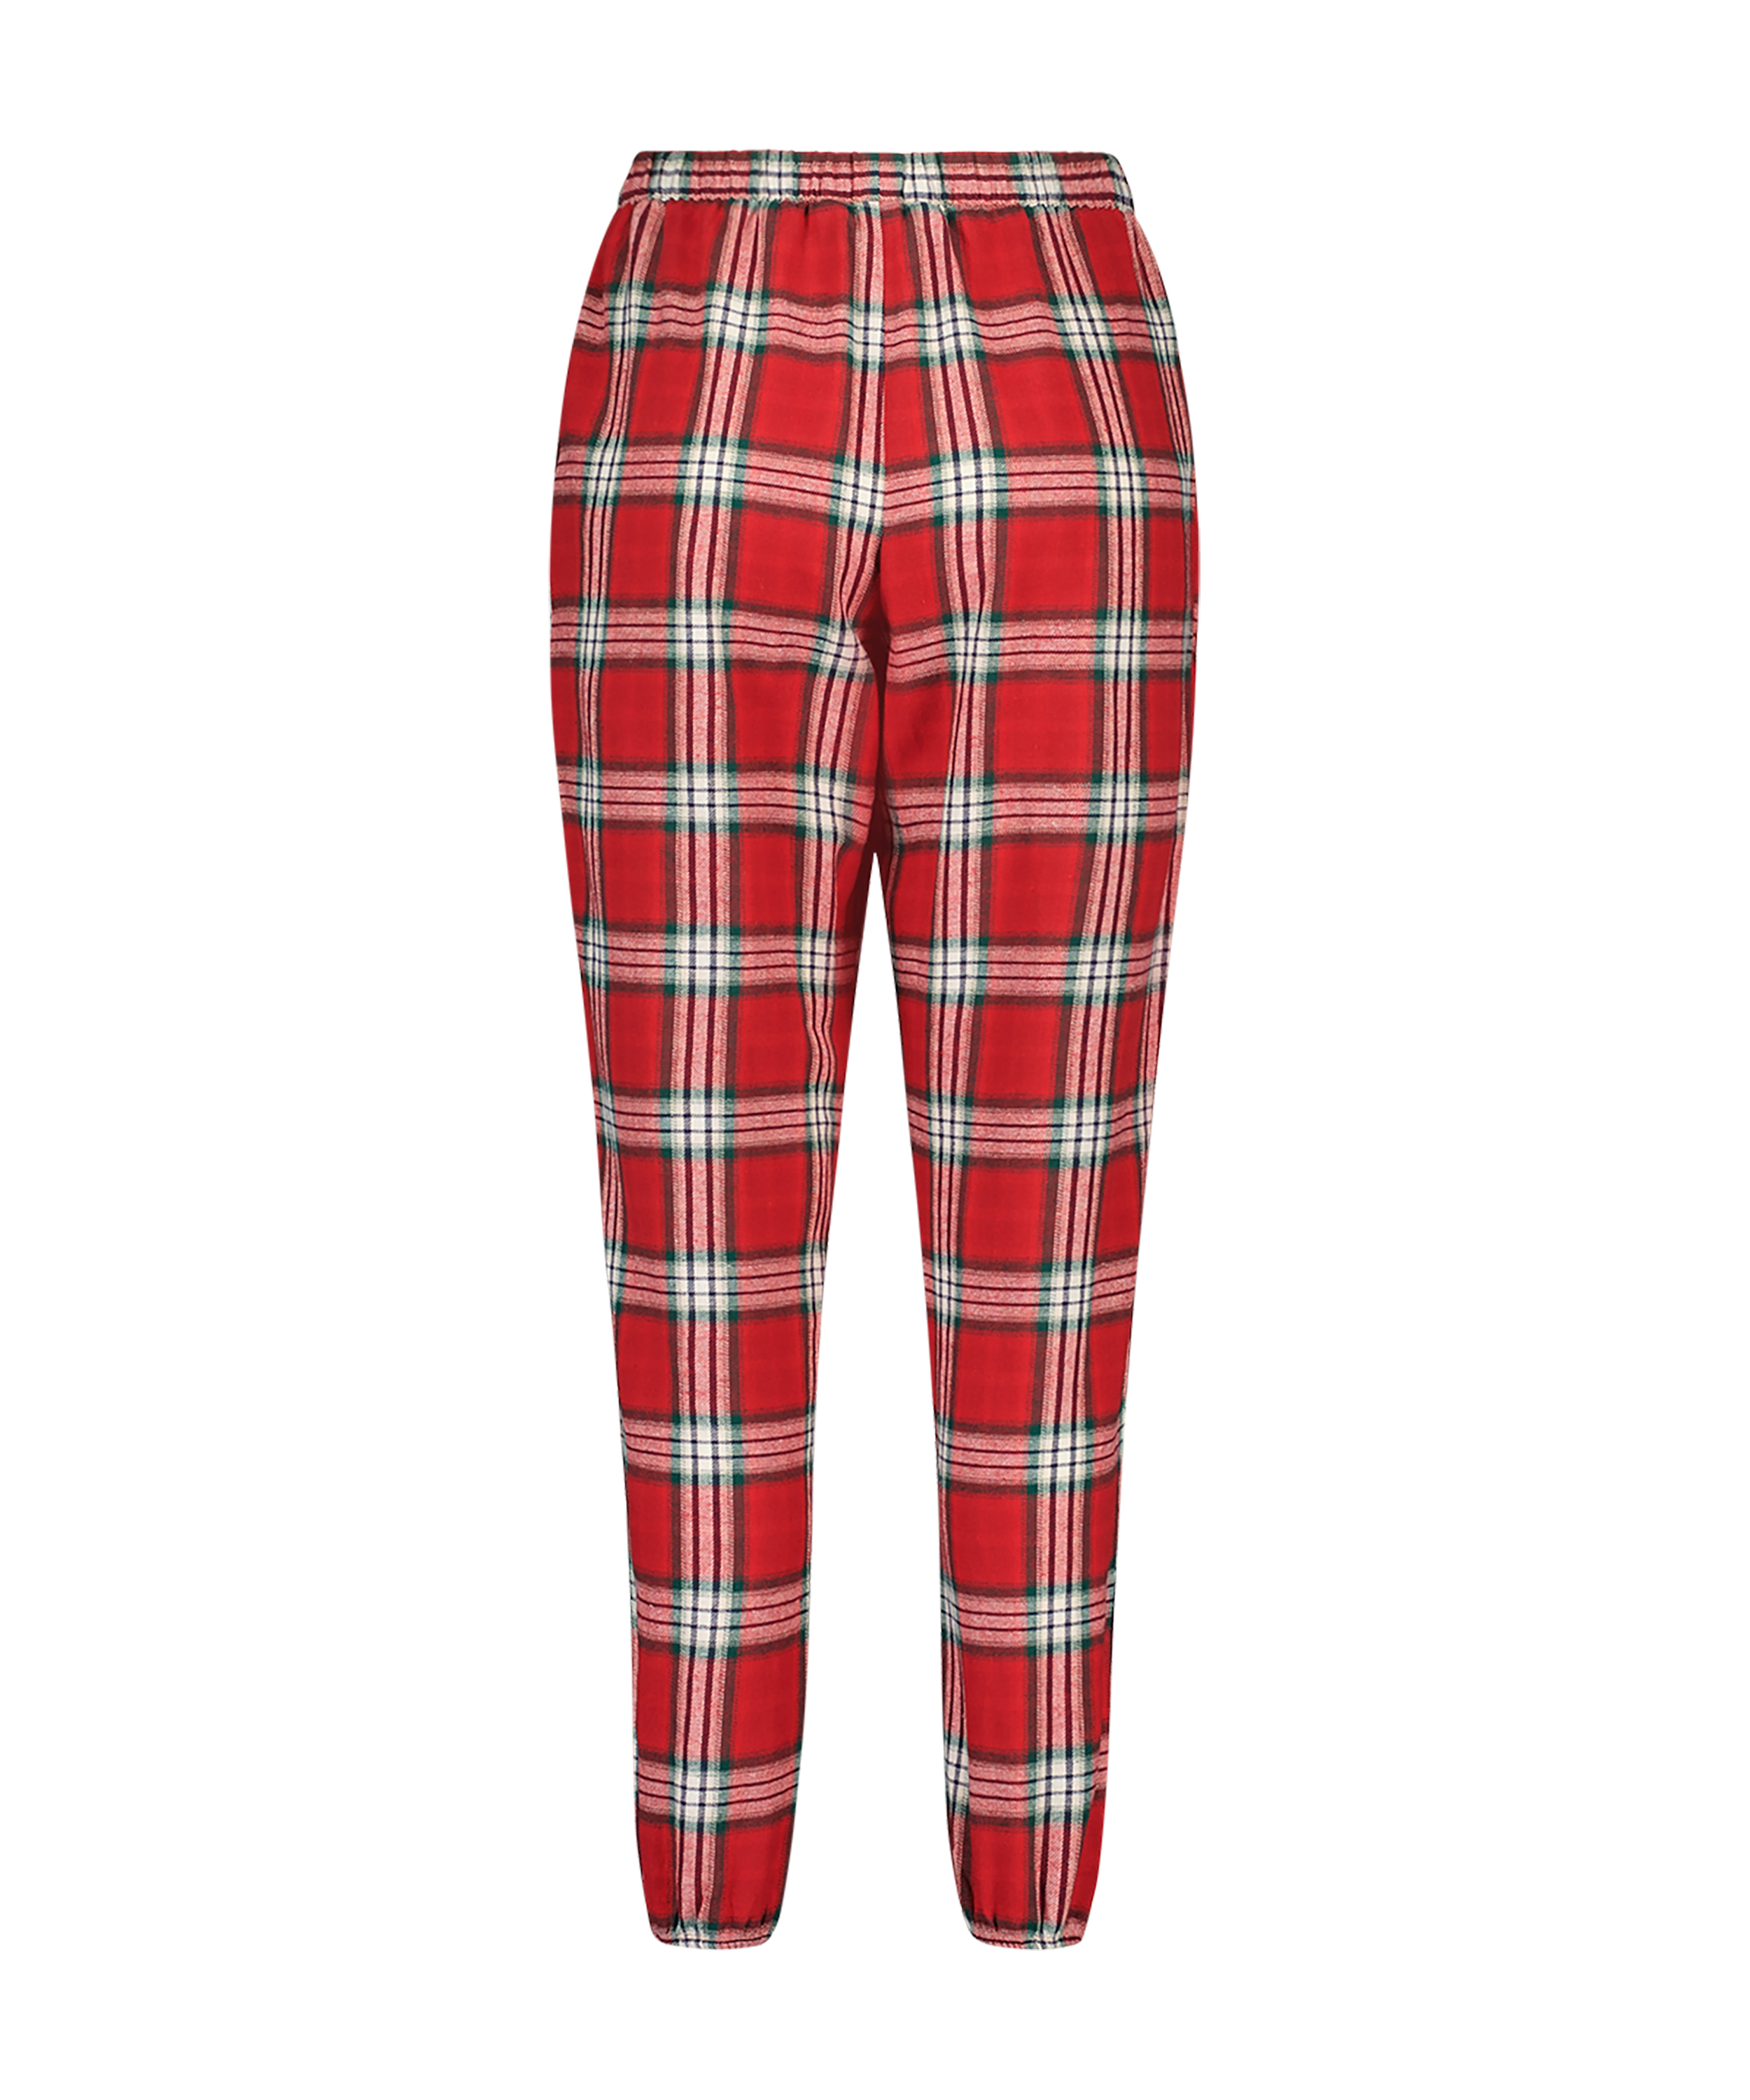 Tall Twill Check pyjama pants, Red, main